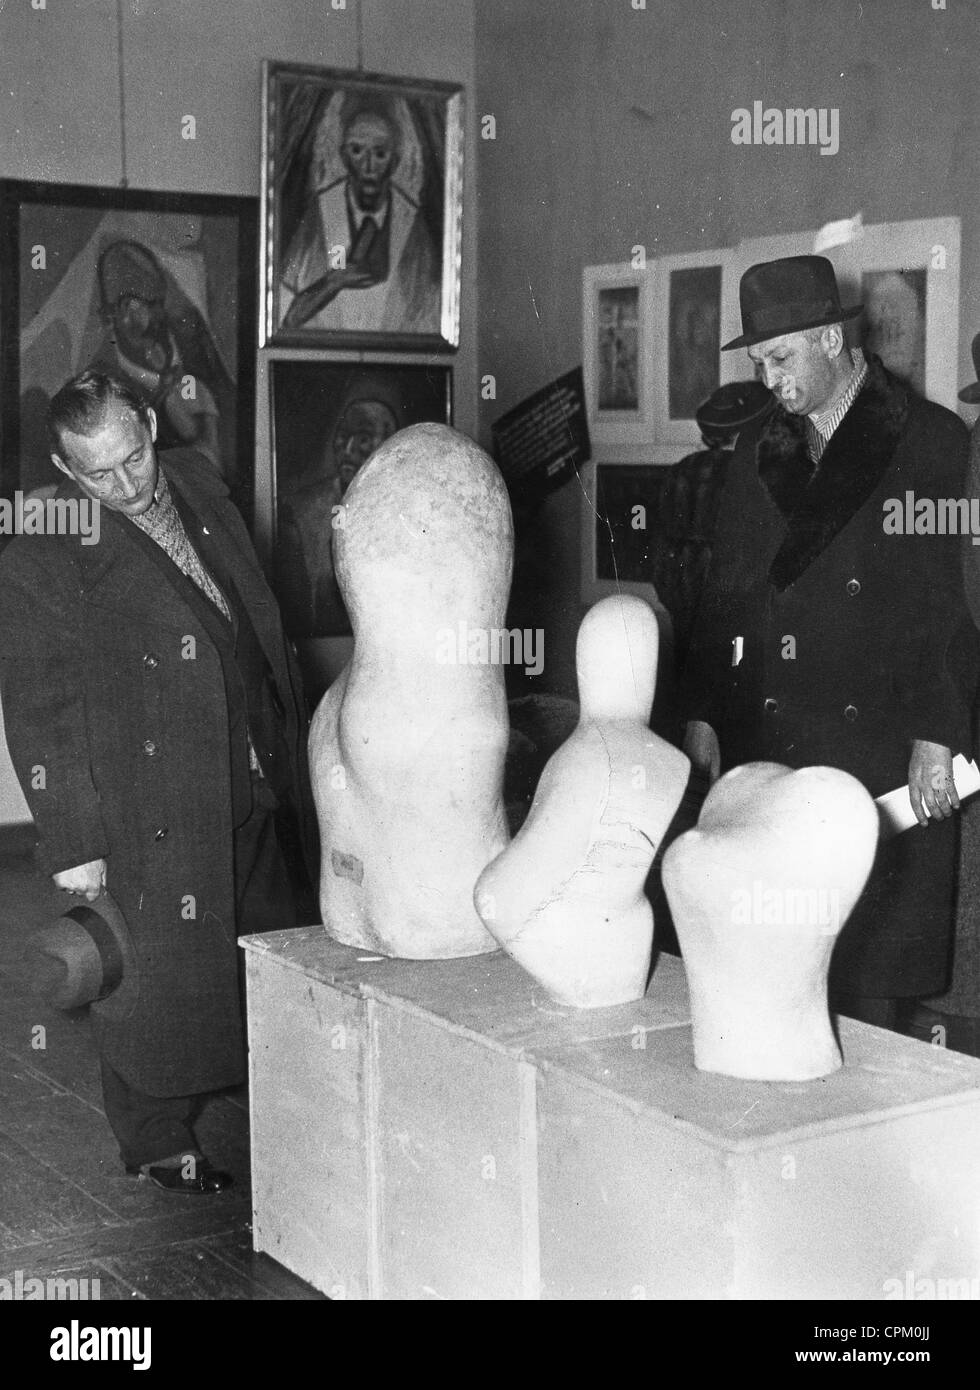 The exhibition 'Degenerate Art' in Berlin, 1938 Stock Photo